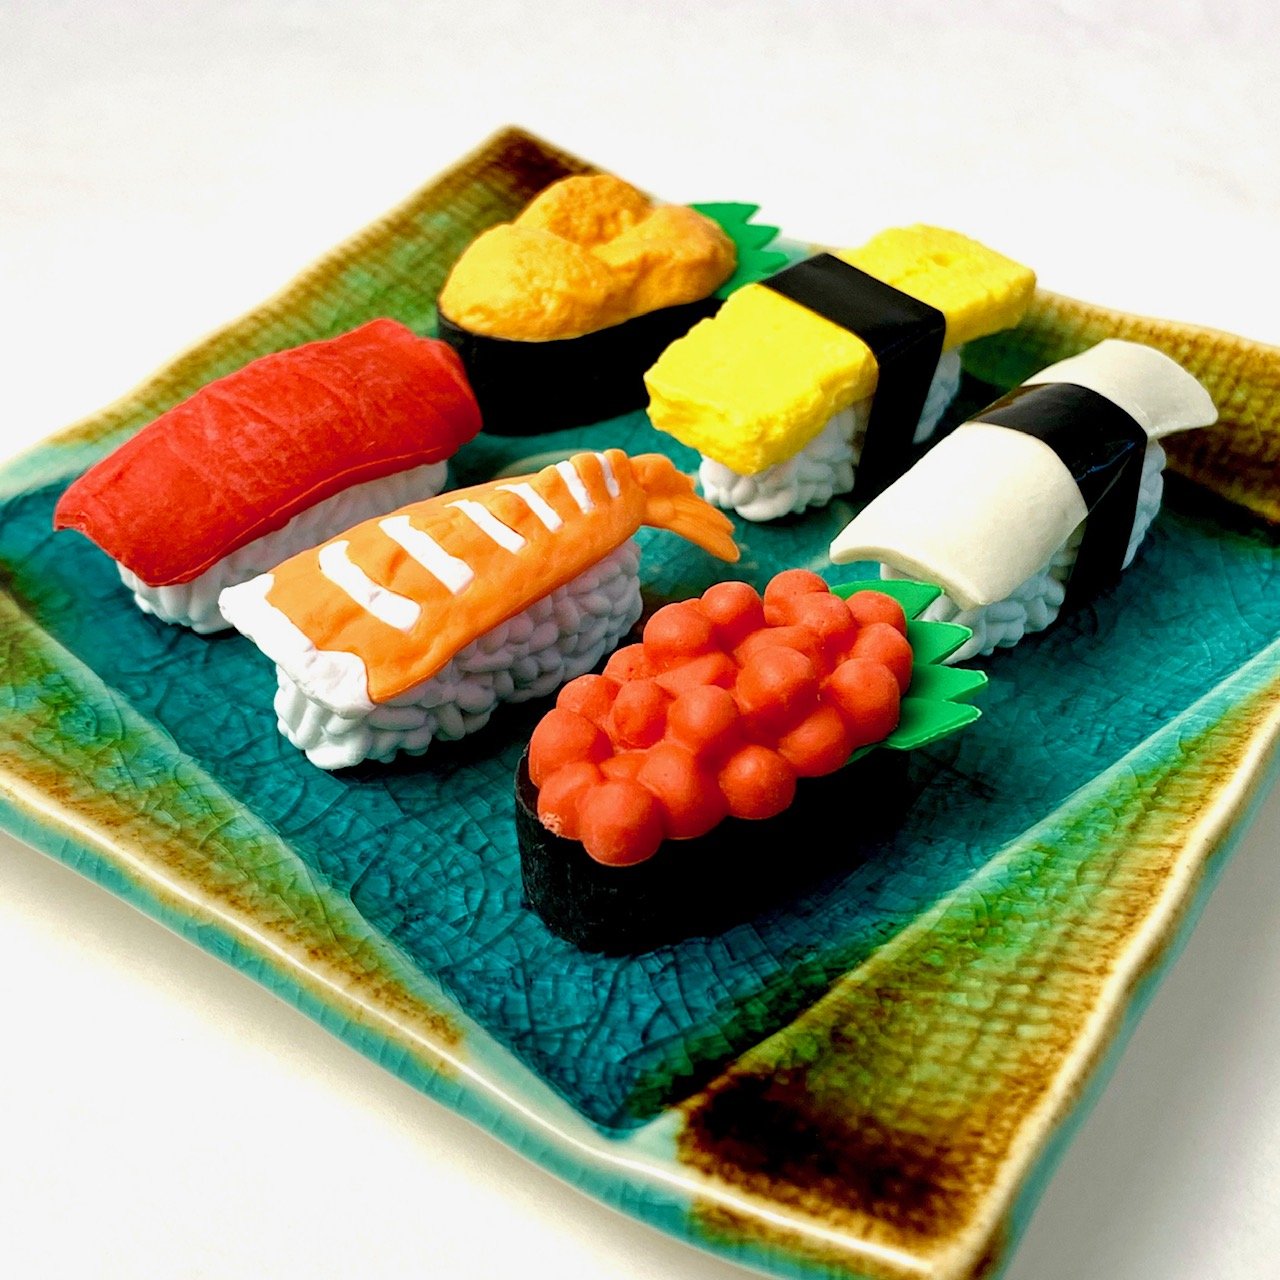 Iwako Sushi Eraser